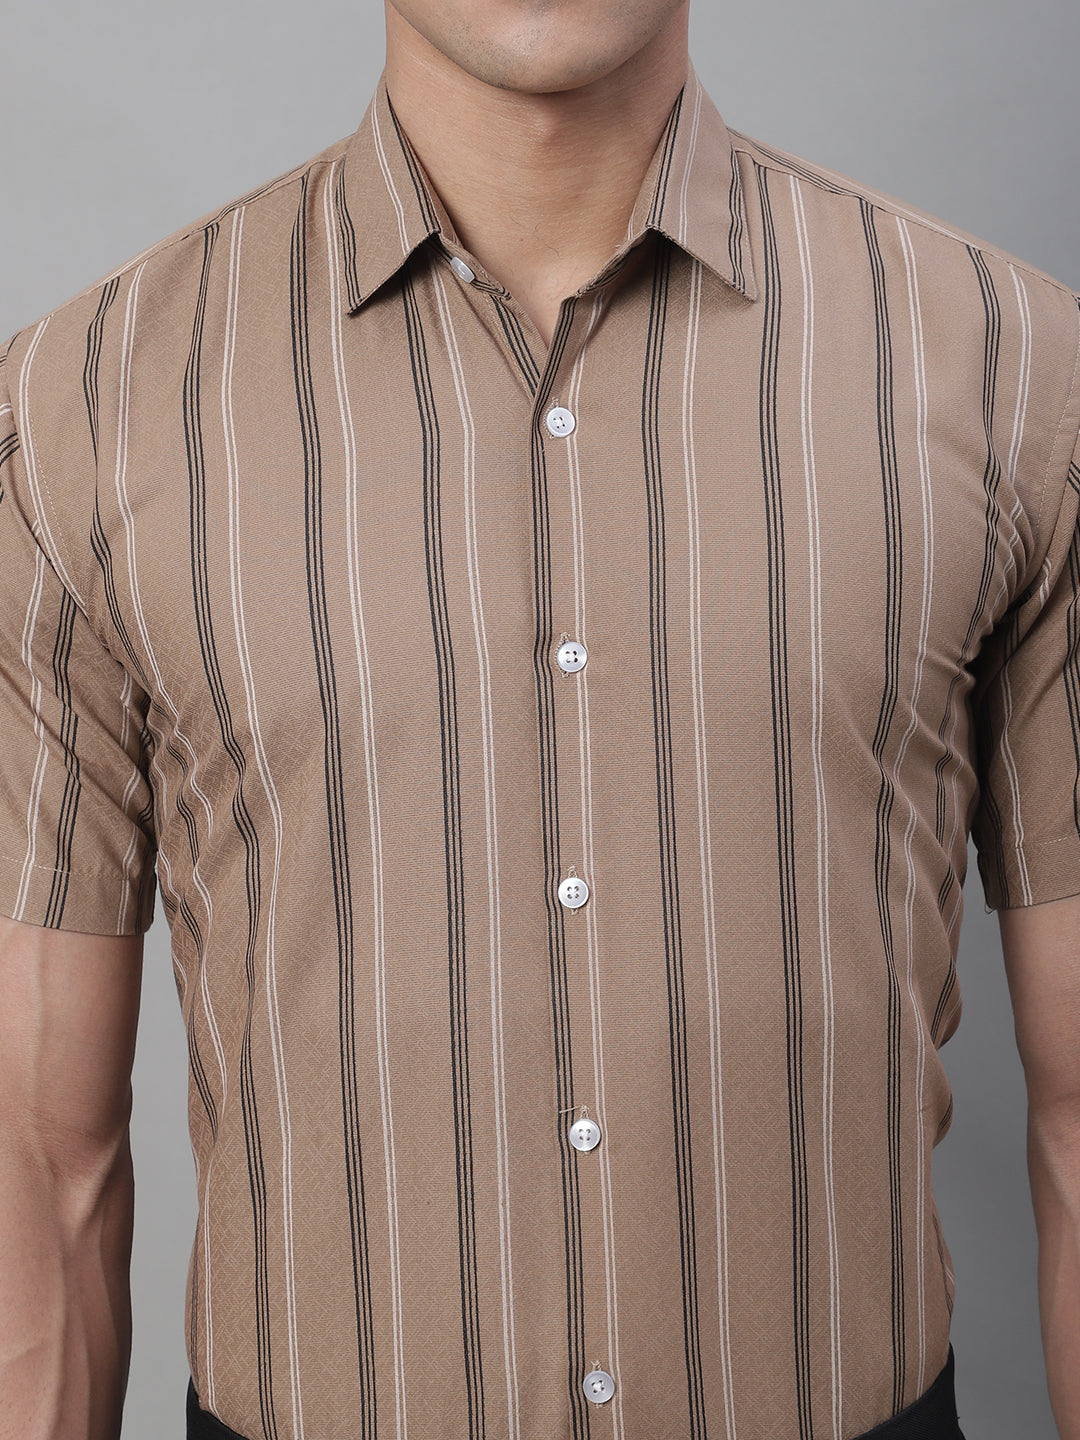 Men's Brown Striped Formal Shirt